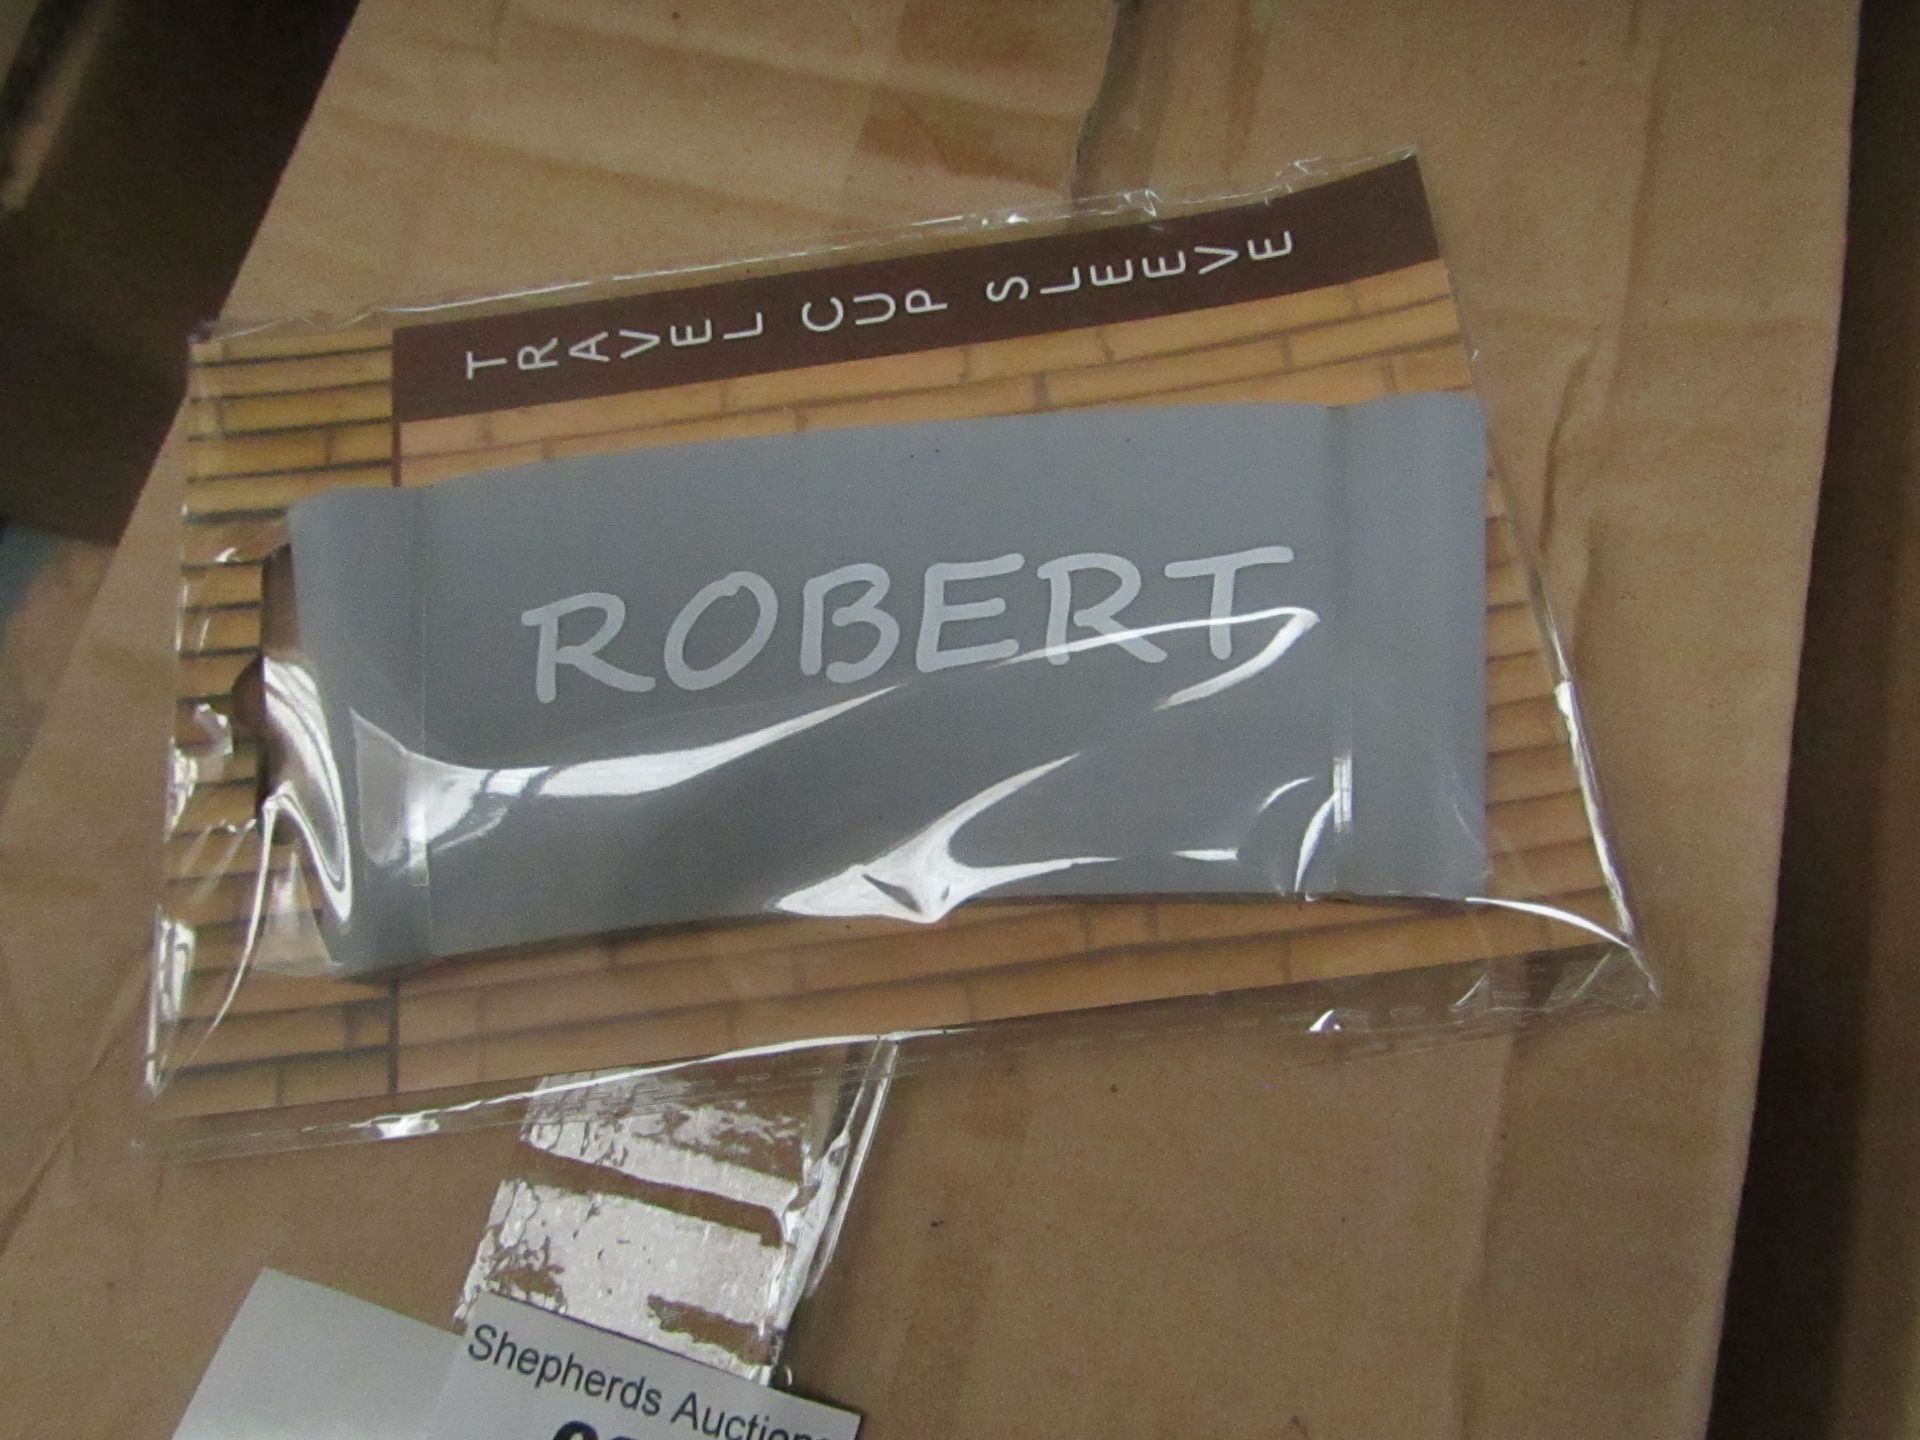 100x Global Journey - "Robert" ( Grey ) Silicone Cup Sleeve - Unused & Boxed.